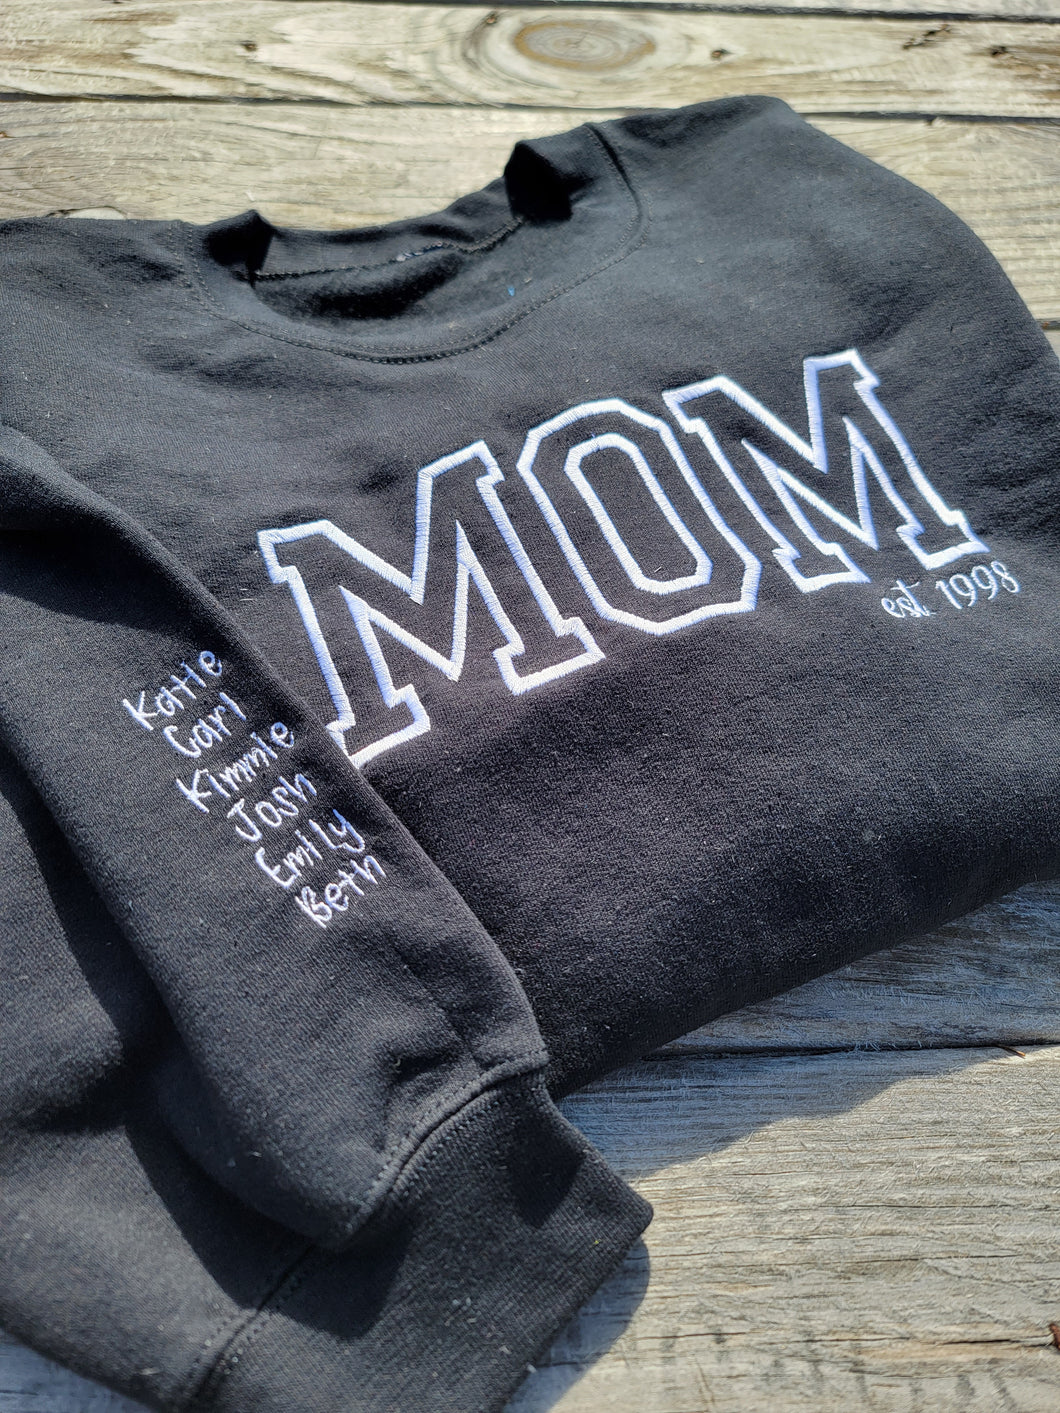 MOM CREWNECK Embroidered Sweatshirt * Personalize*